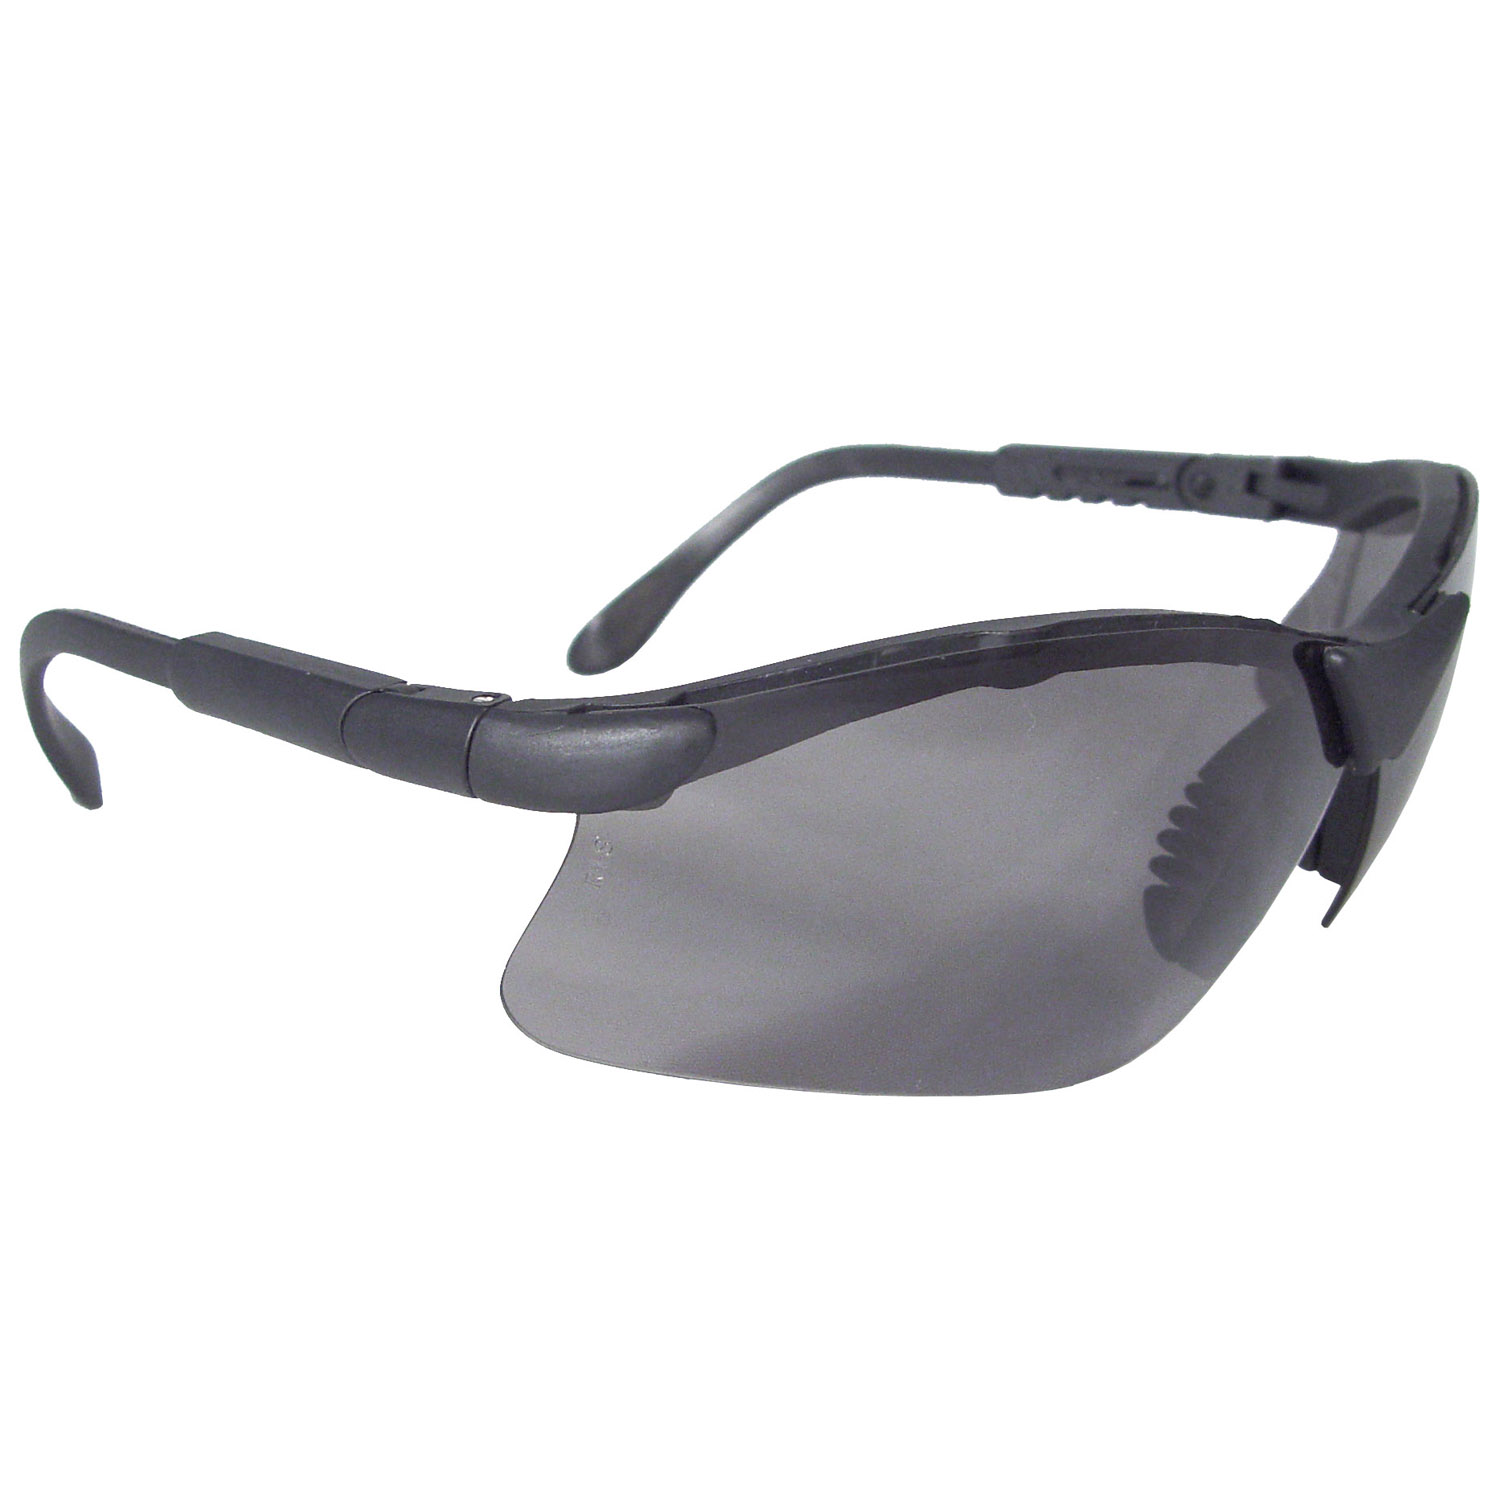 Revelation™ Safety Eyewear - Black Frame - Smoke Lens